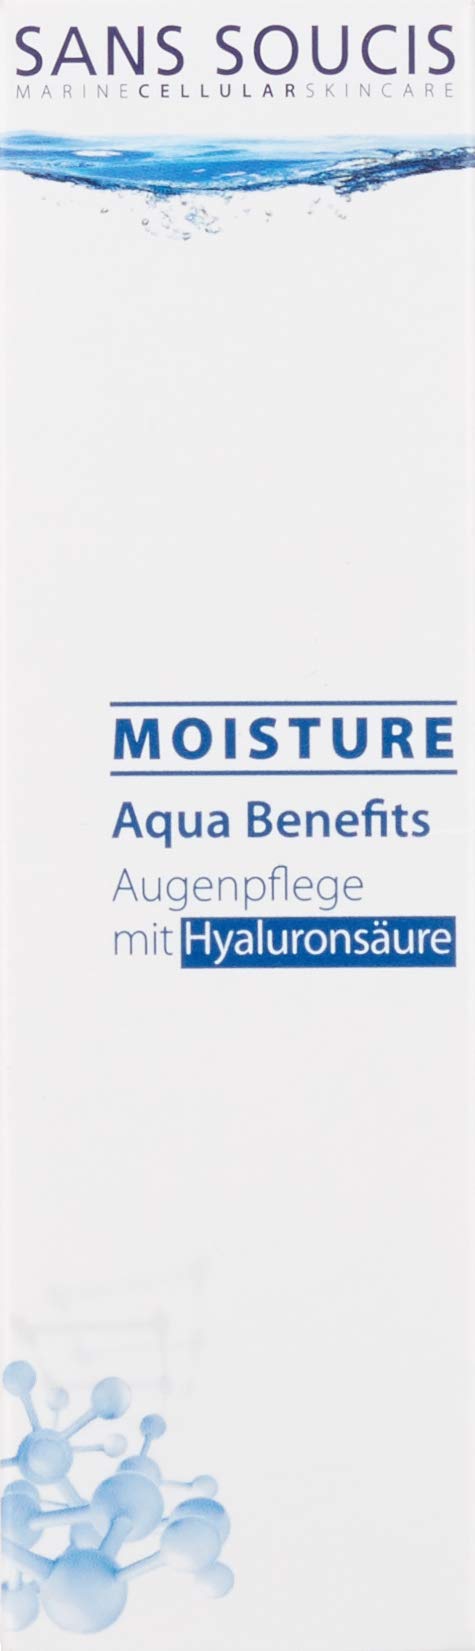 Moisture Aqua Benefits Eye Care 15 ml by Sans Soucis - BeesActive Australia